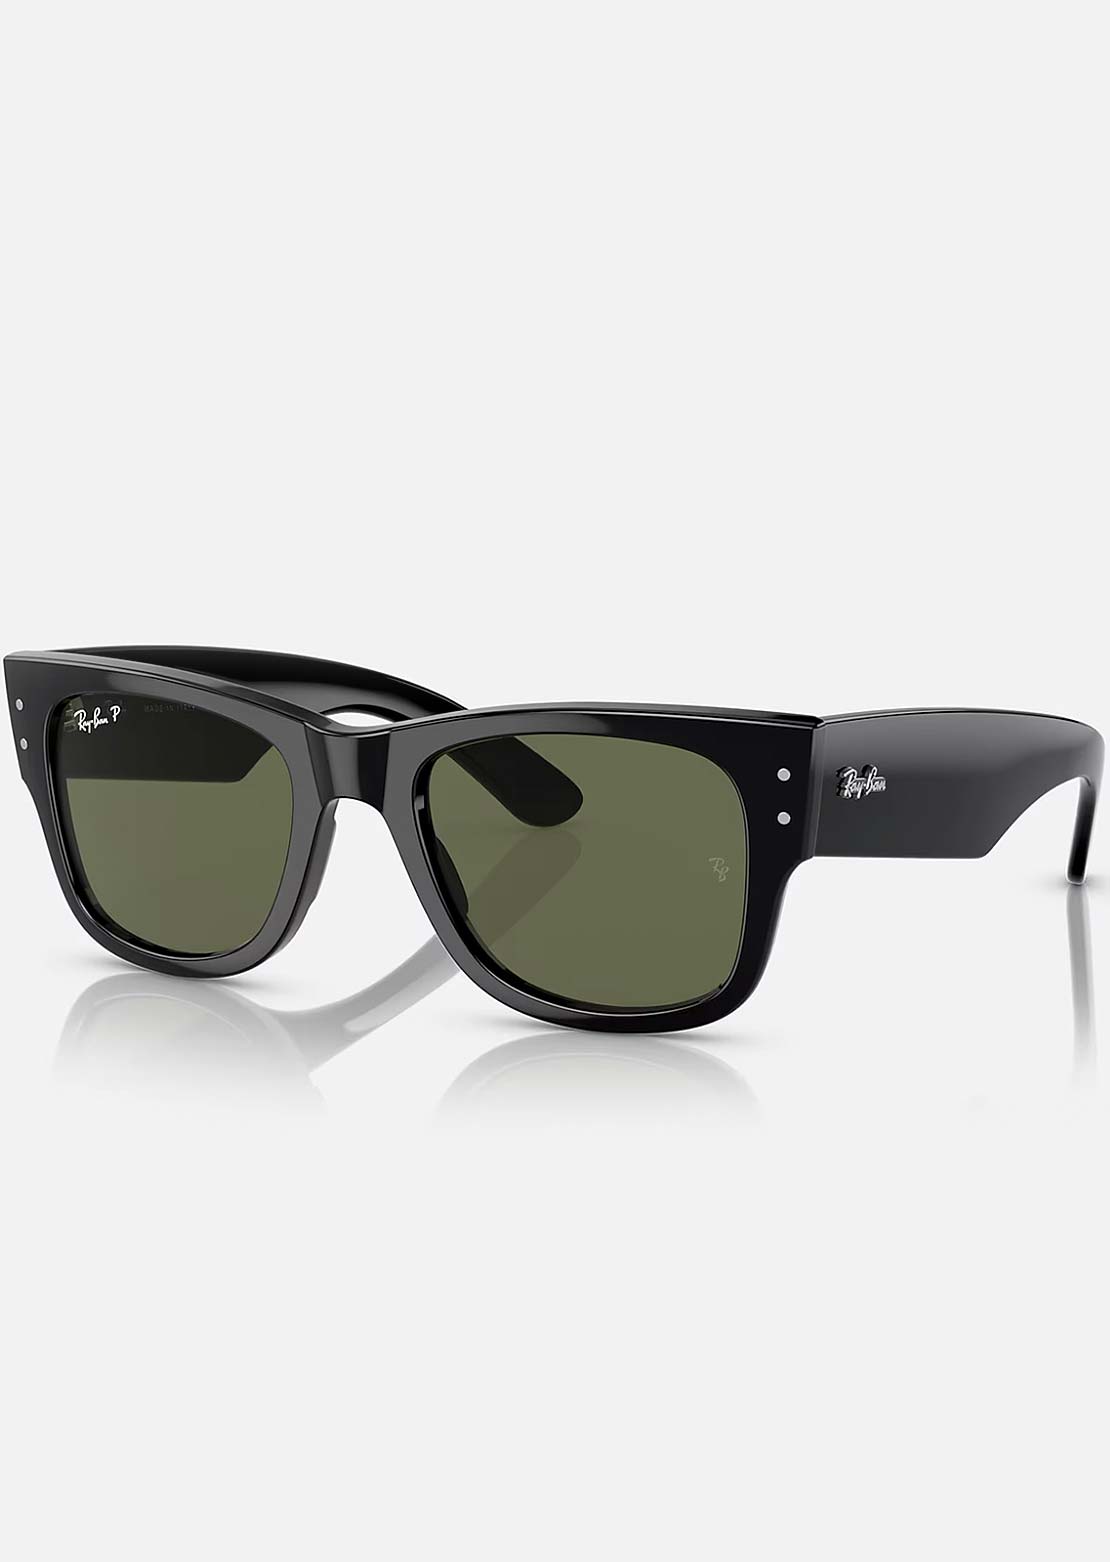 Ray-Ban Mega Wayfarer Sunglasses Black